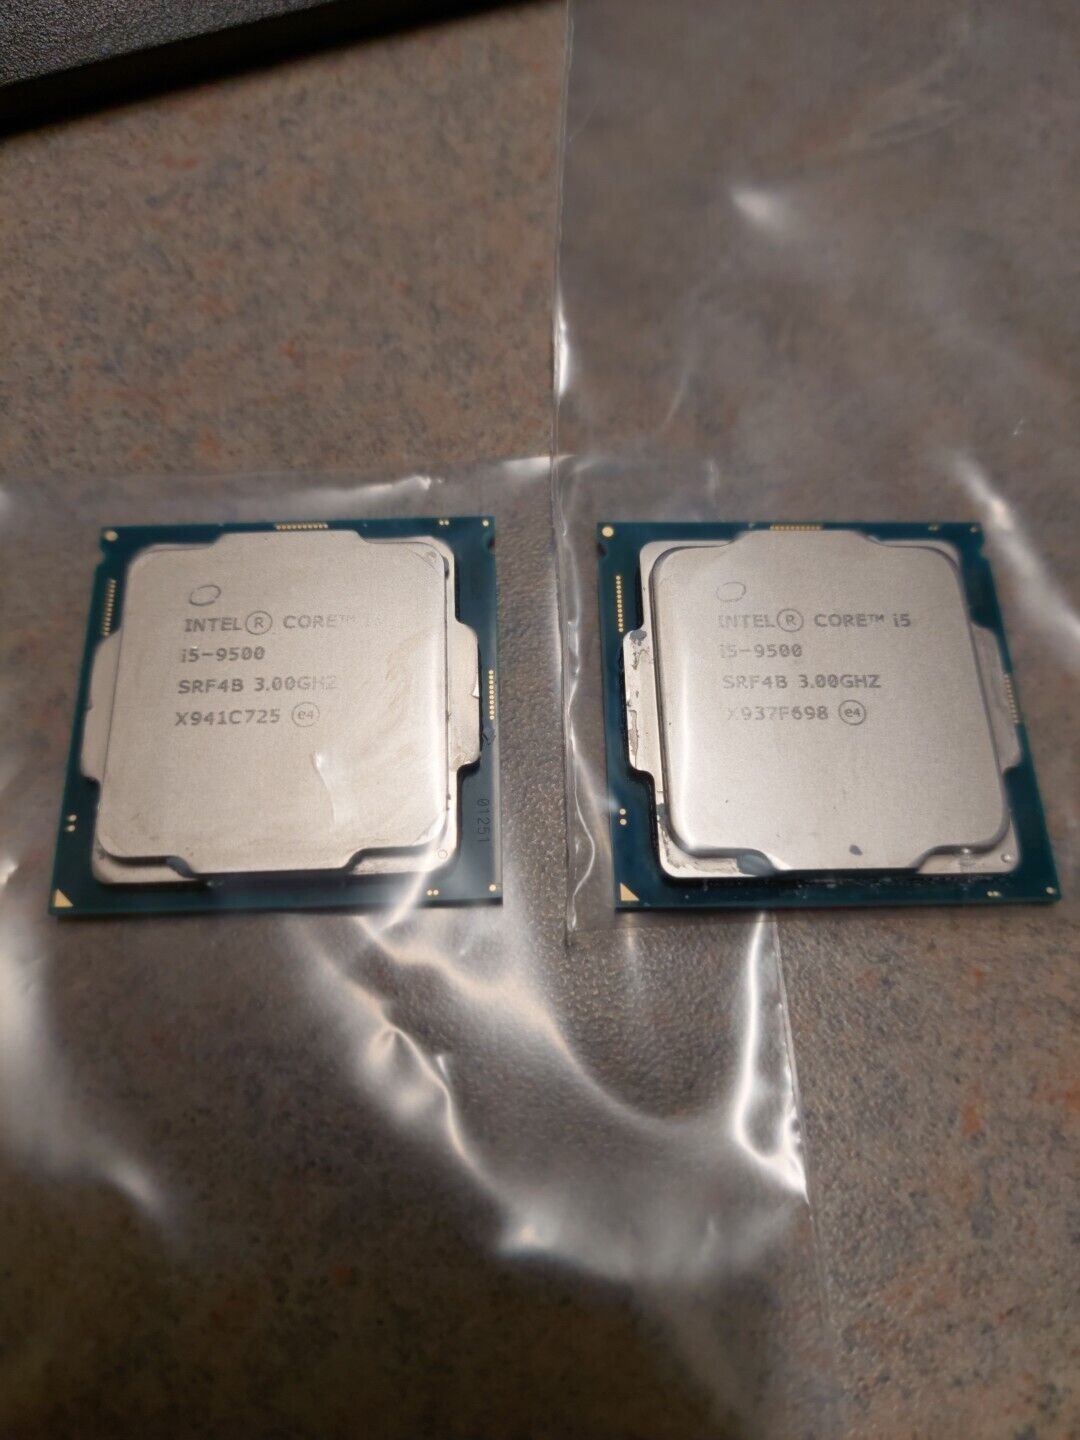 Lot of 2 Intel Core i5-9500 3.0 GHz LGA 1151 CPU